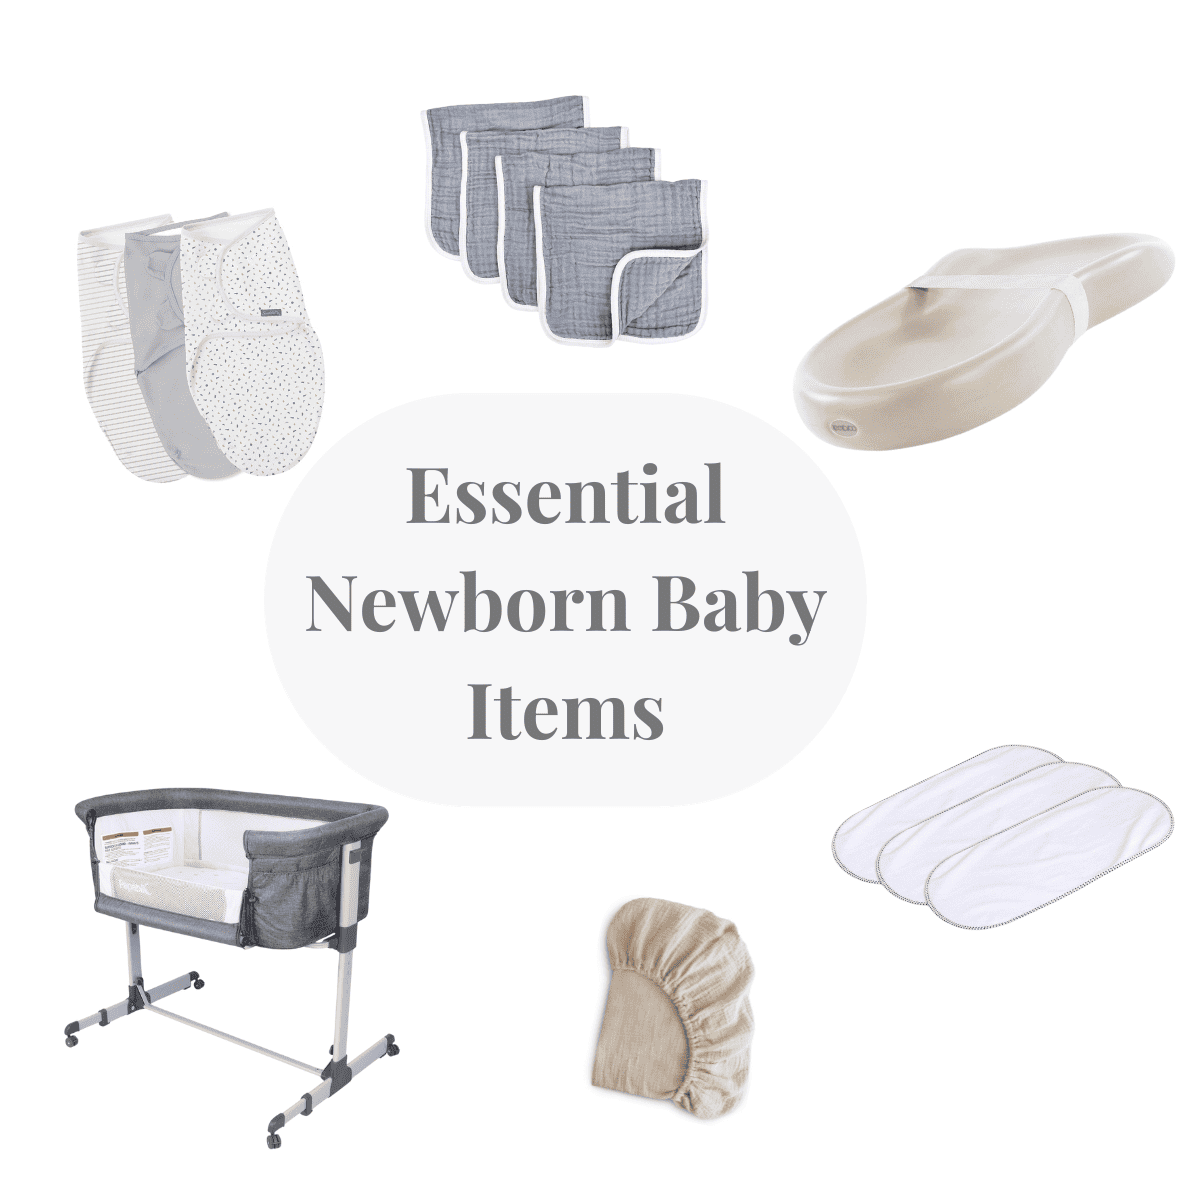 Essential Newborn Baby Items